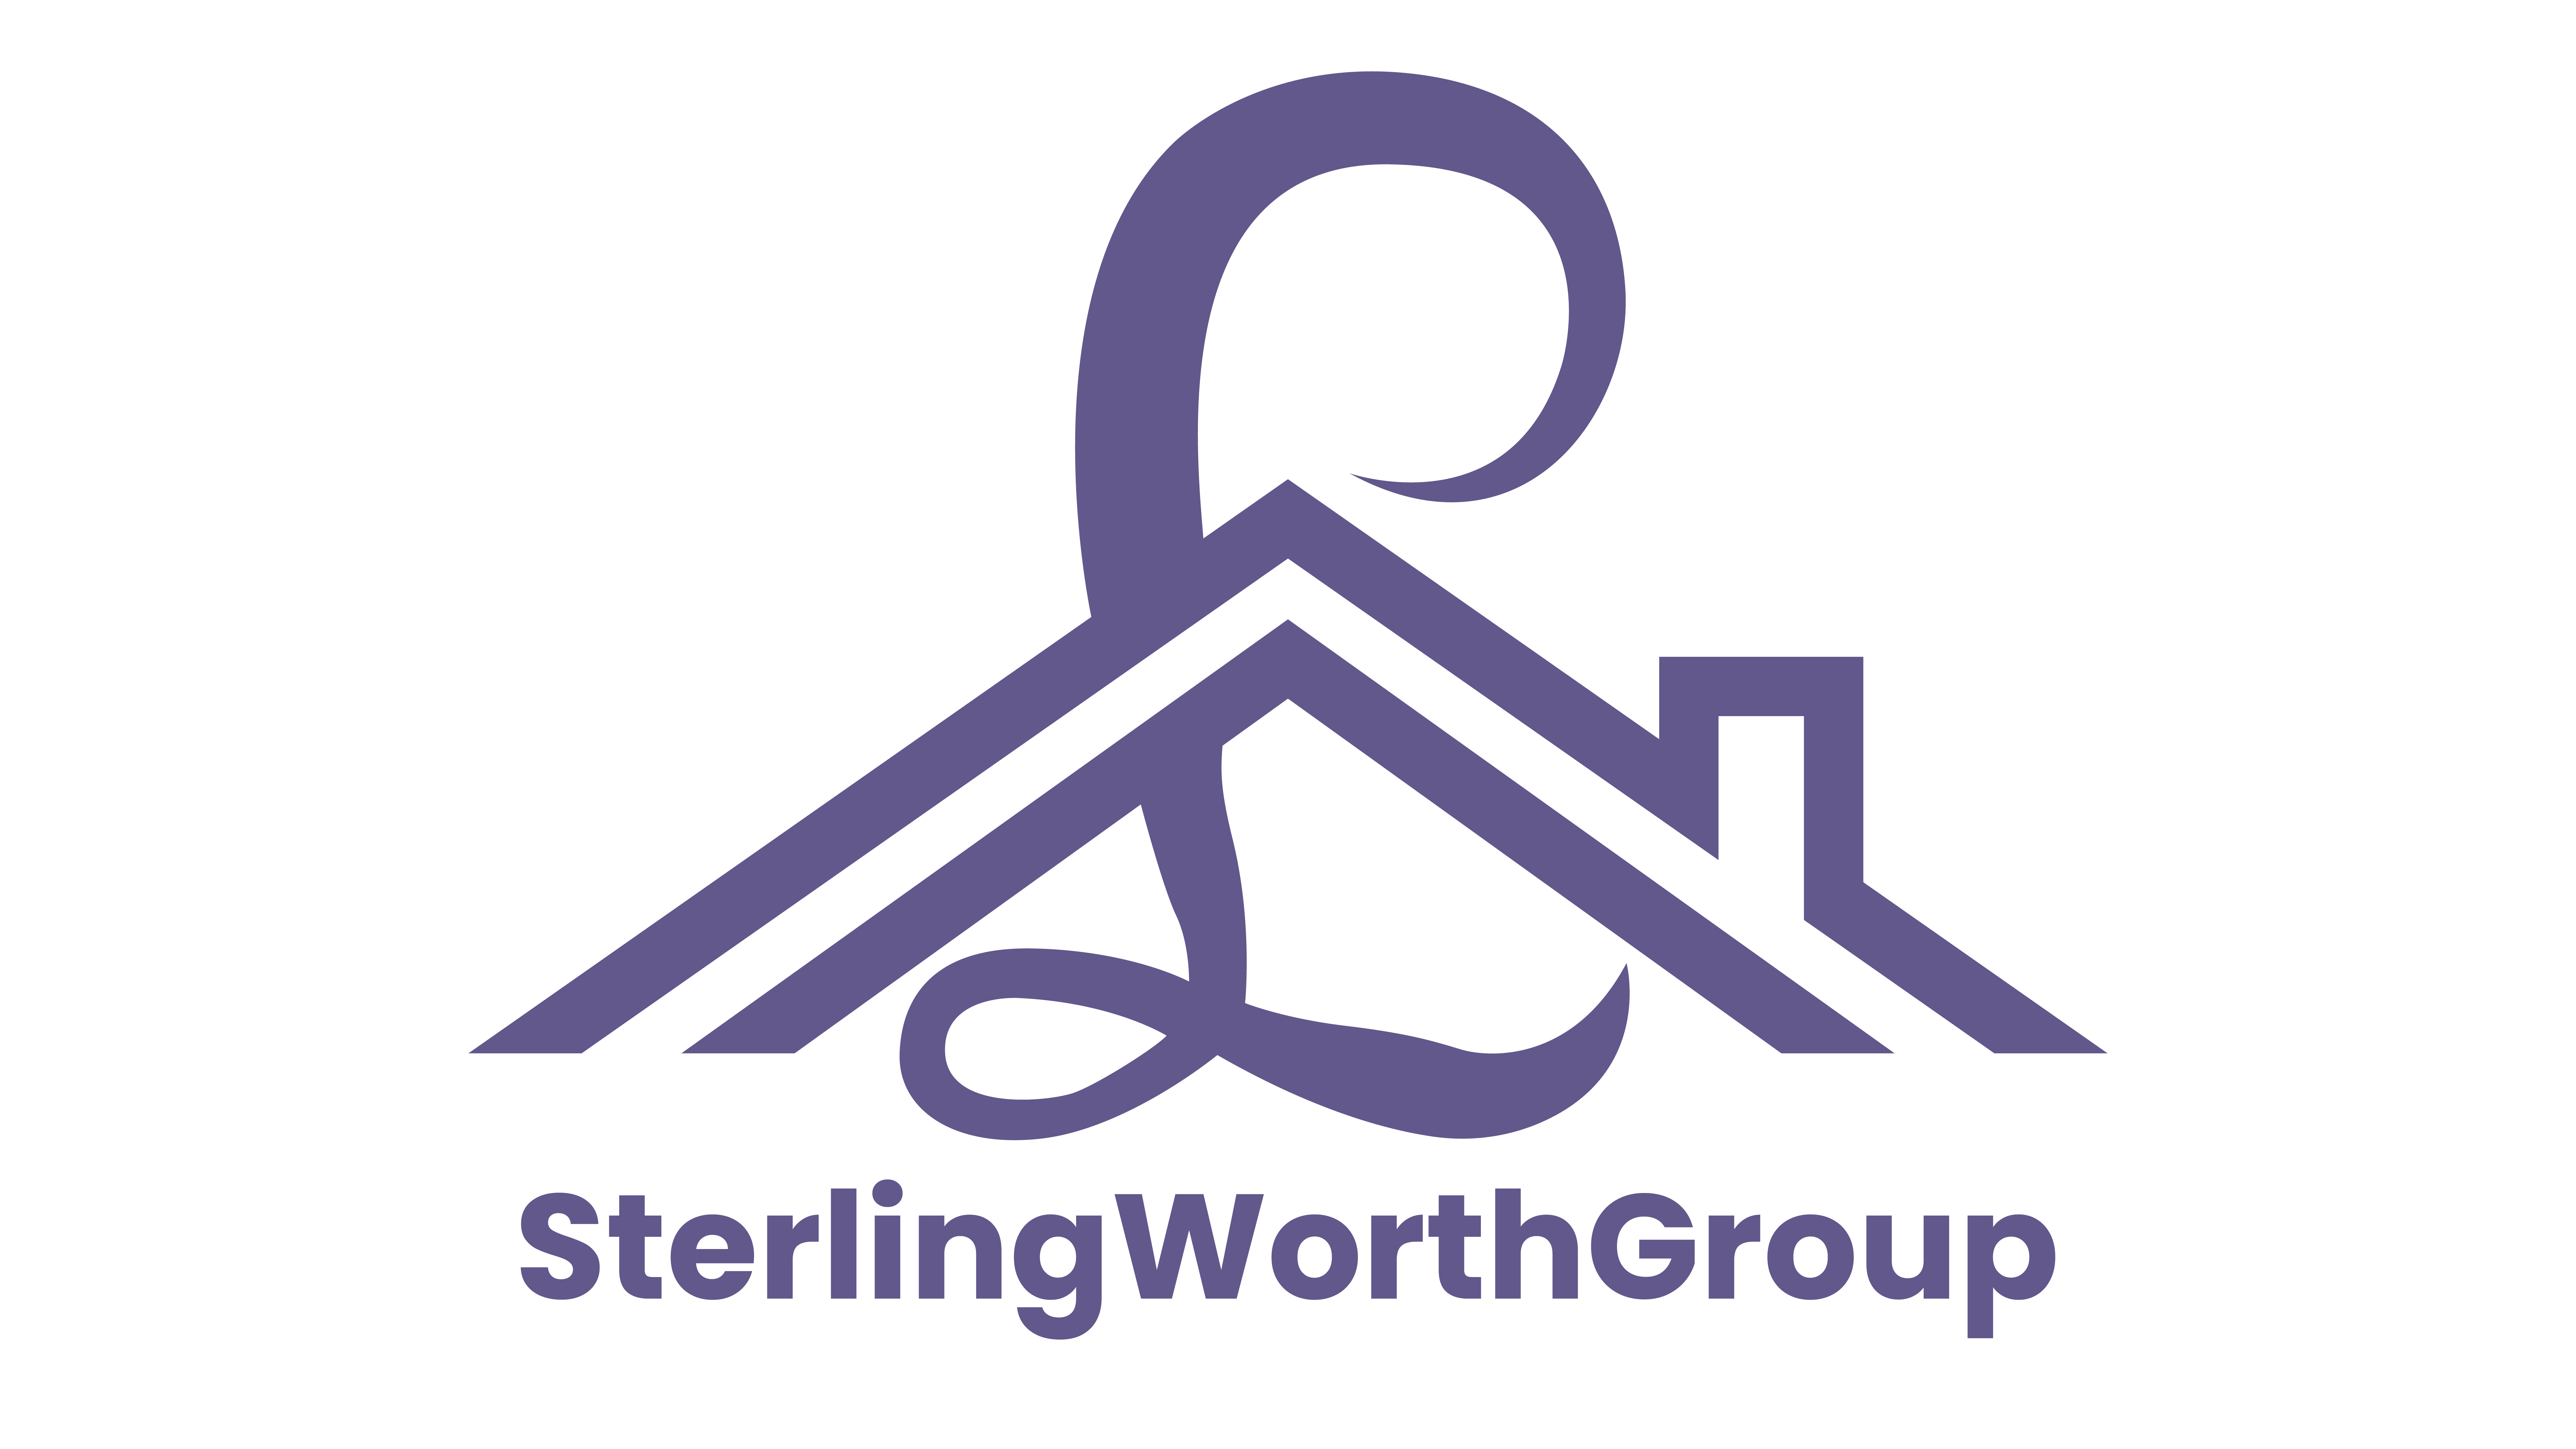 Sterlingworthgroup